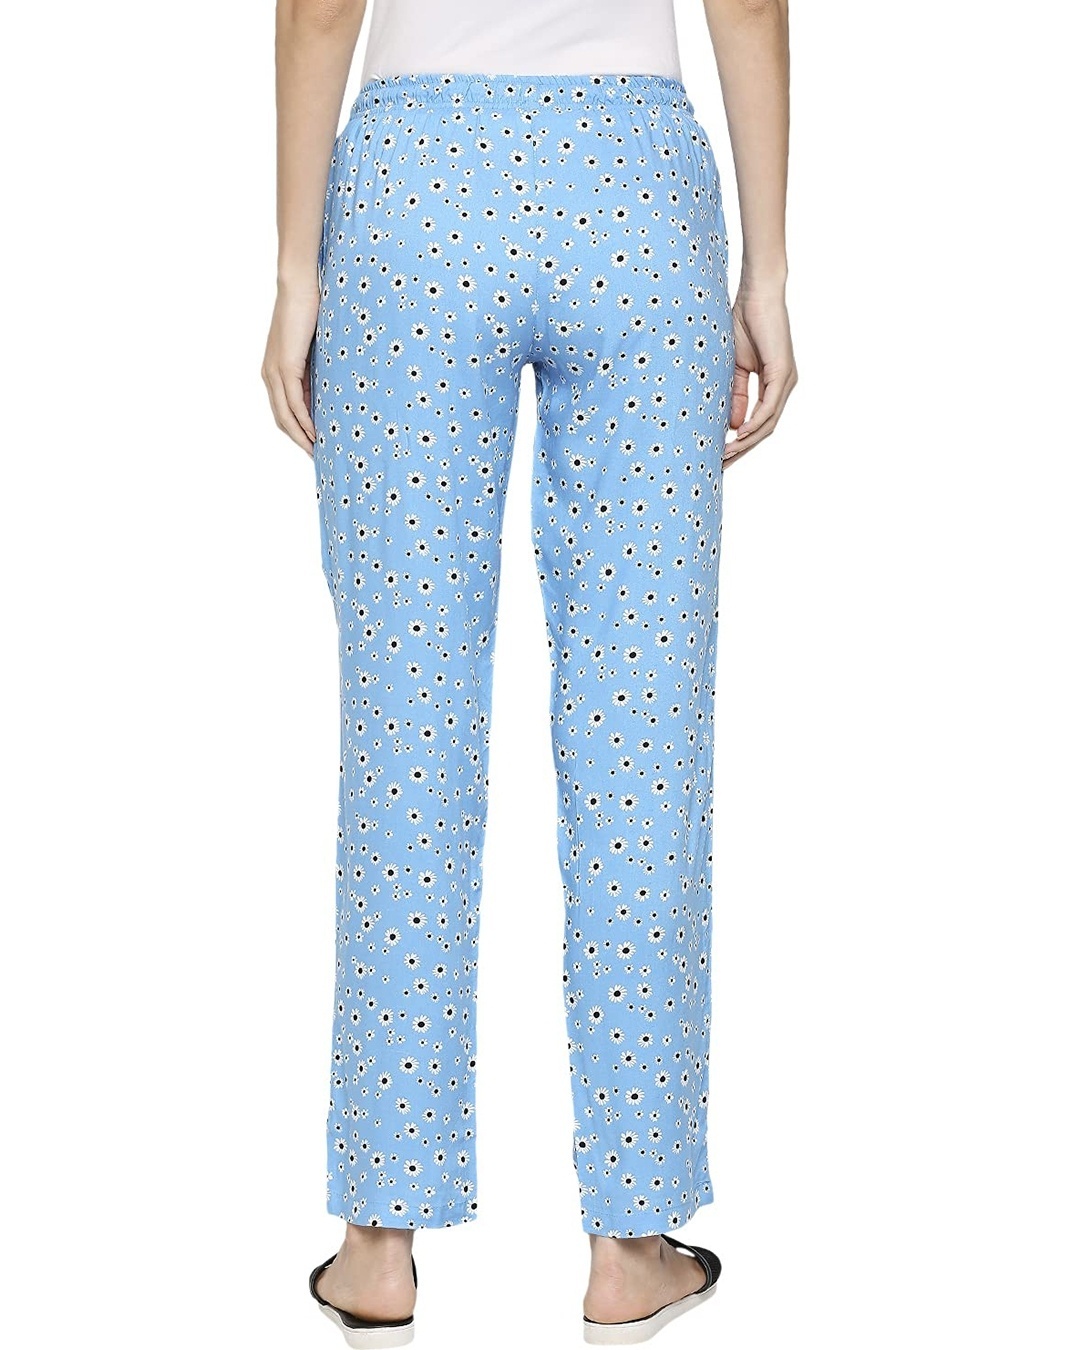 Shop Women's Blue All Over Floral Printed Pyjamas-Design